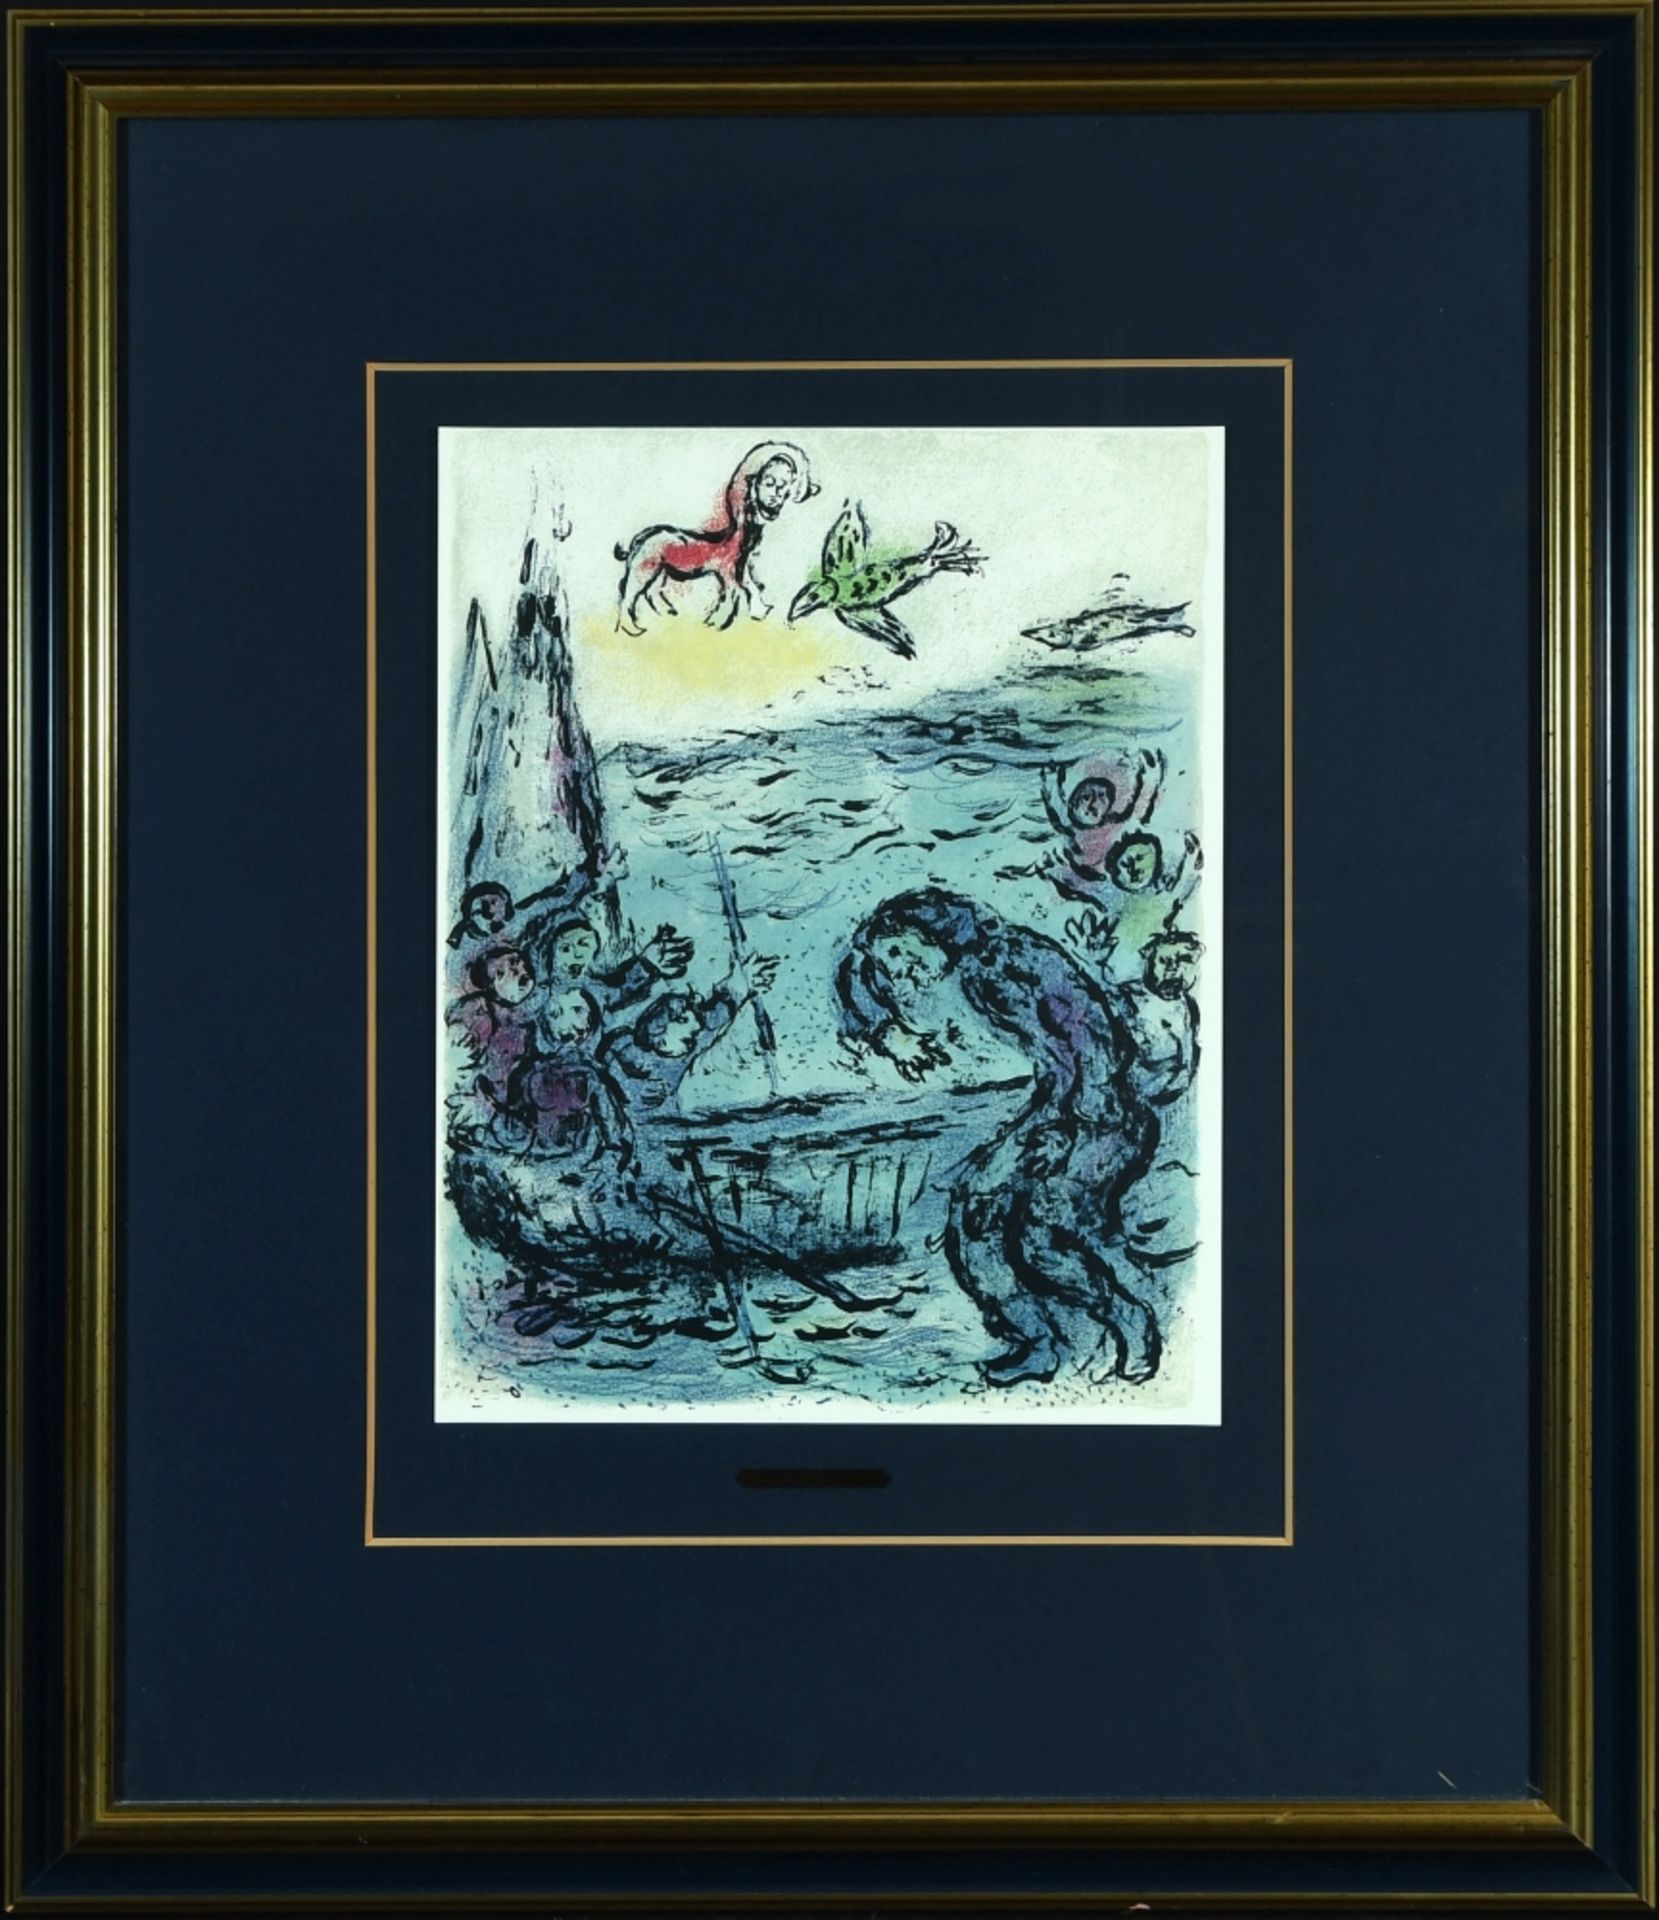 Chagall, Marc, 1887 Vitebsk - 1985 Saint-Paul-de-Vence